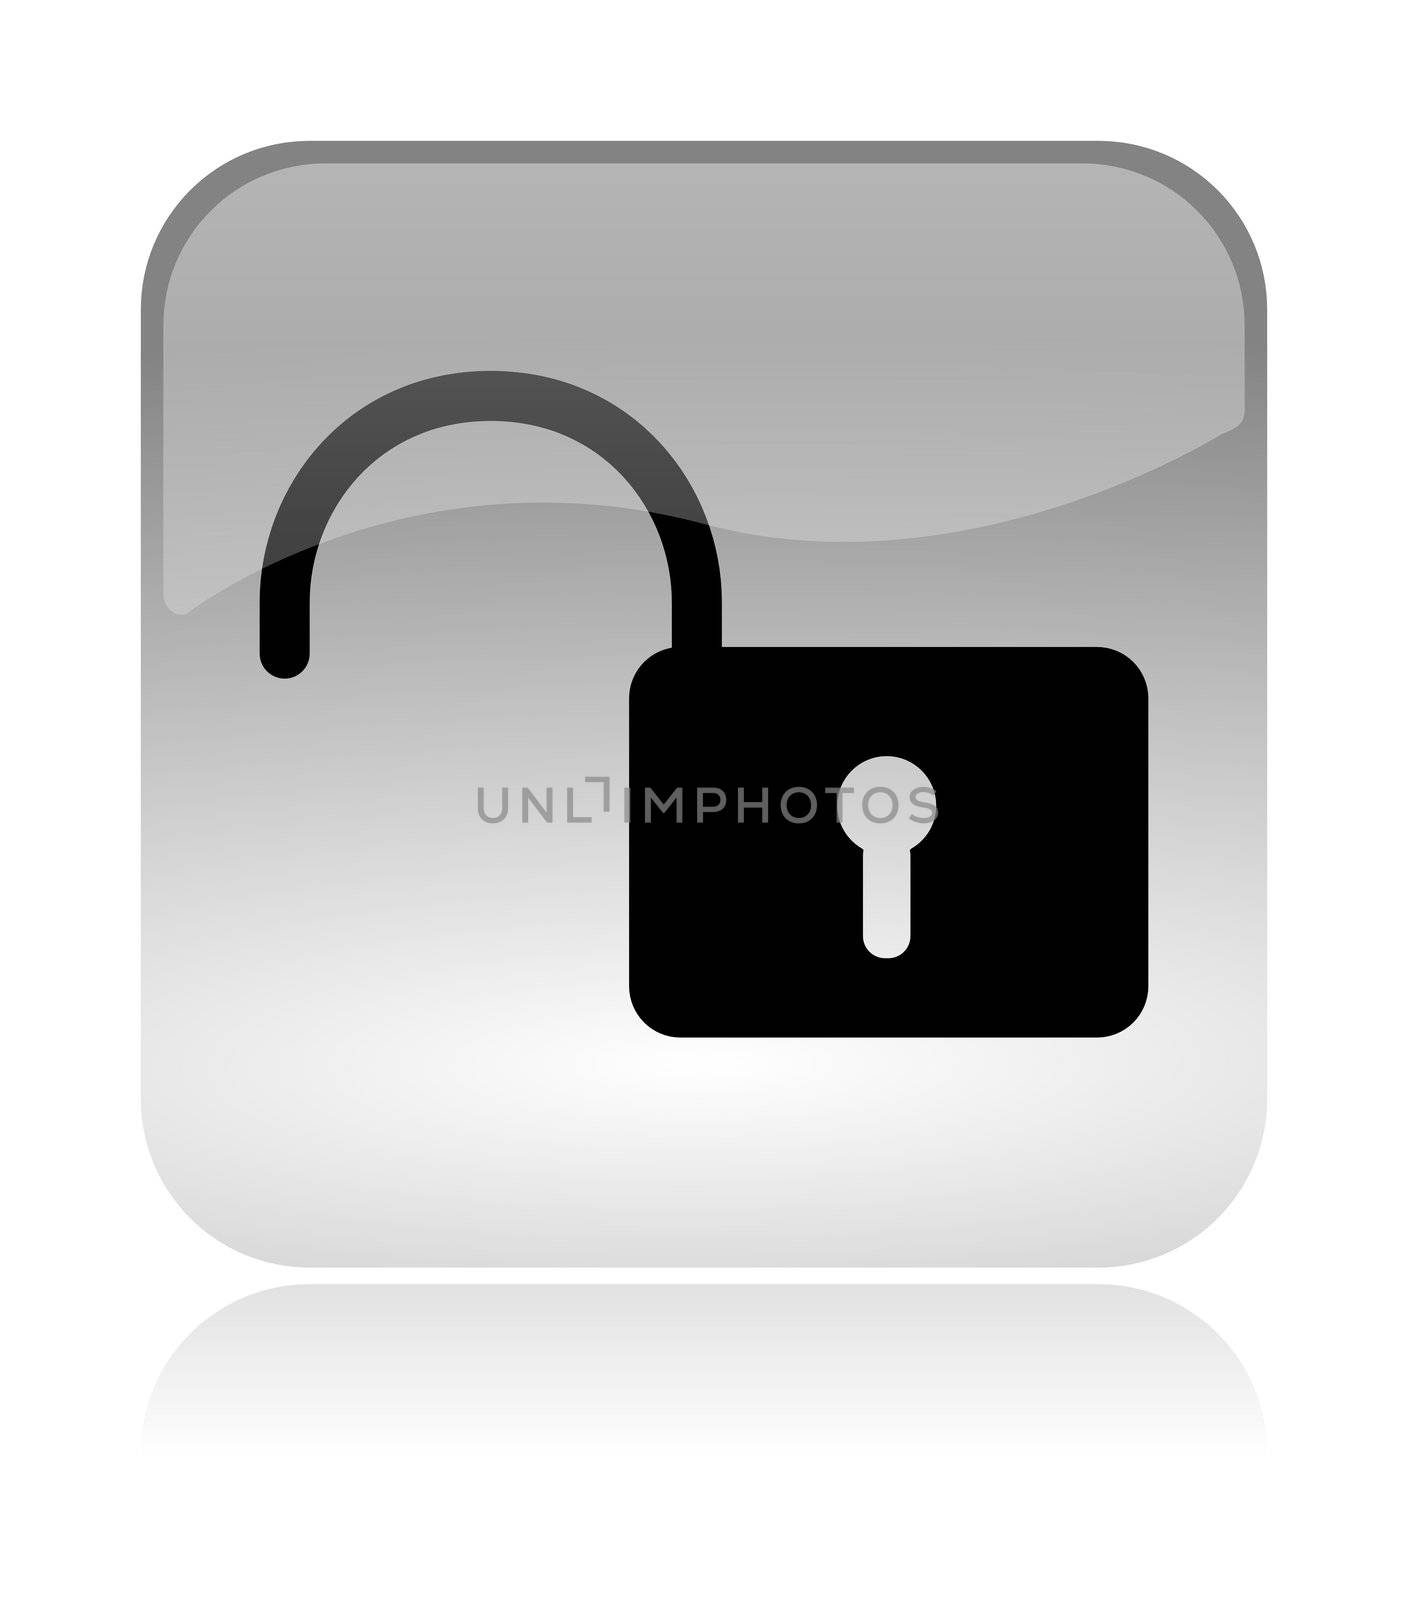 Unlock security padlock web interface icon by make